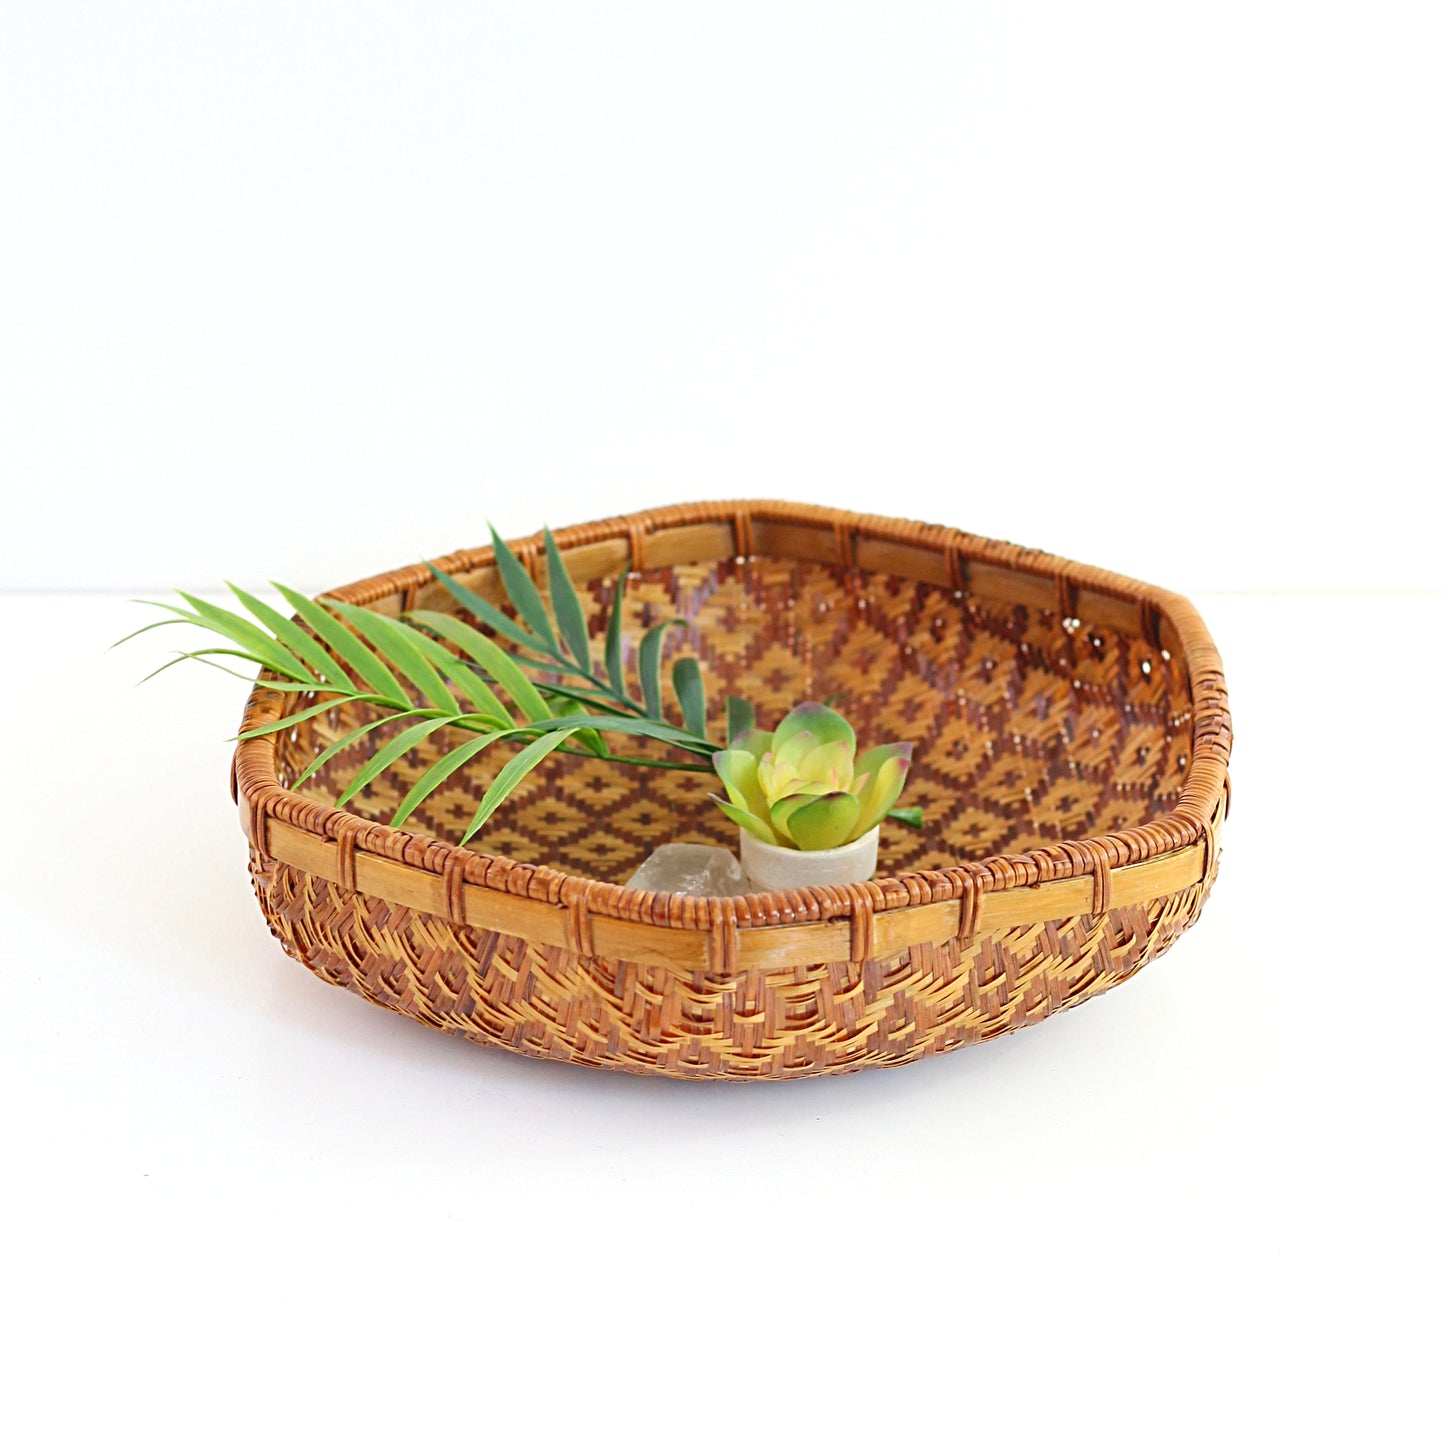 SOLD - Vintage Woven Geometric Basket Tray